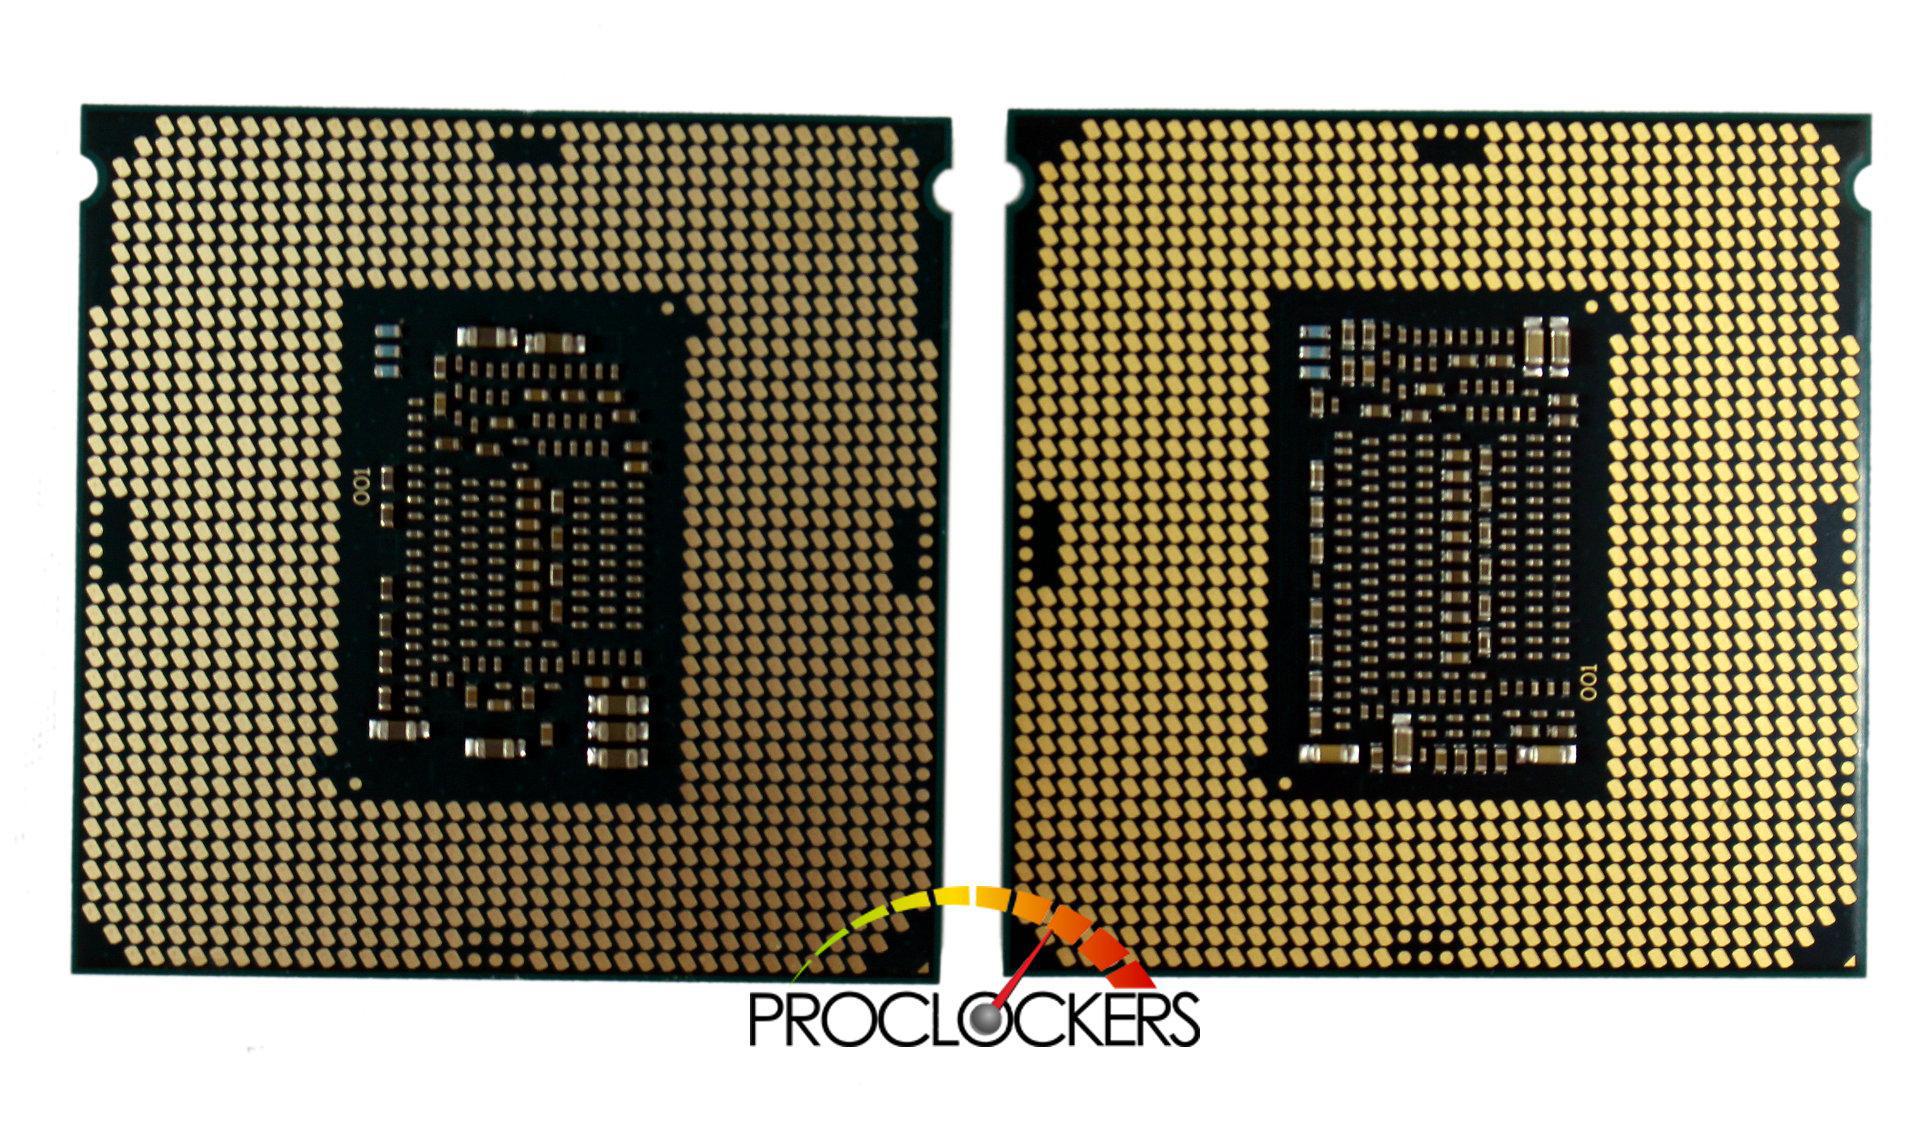 Intel Core i7-8700K CPU Review | Gaming Gorilla